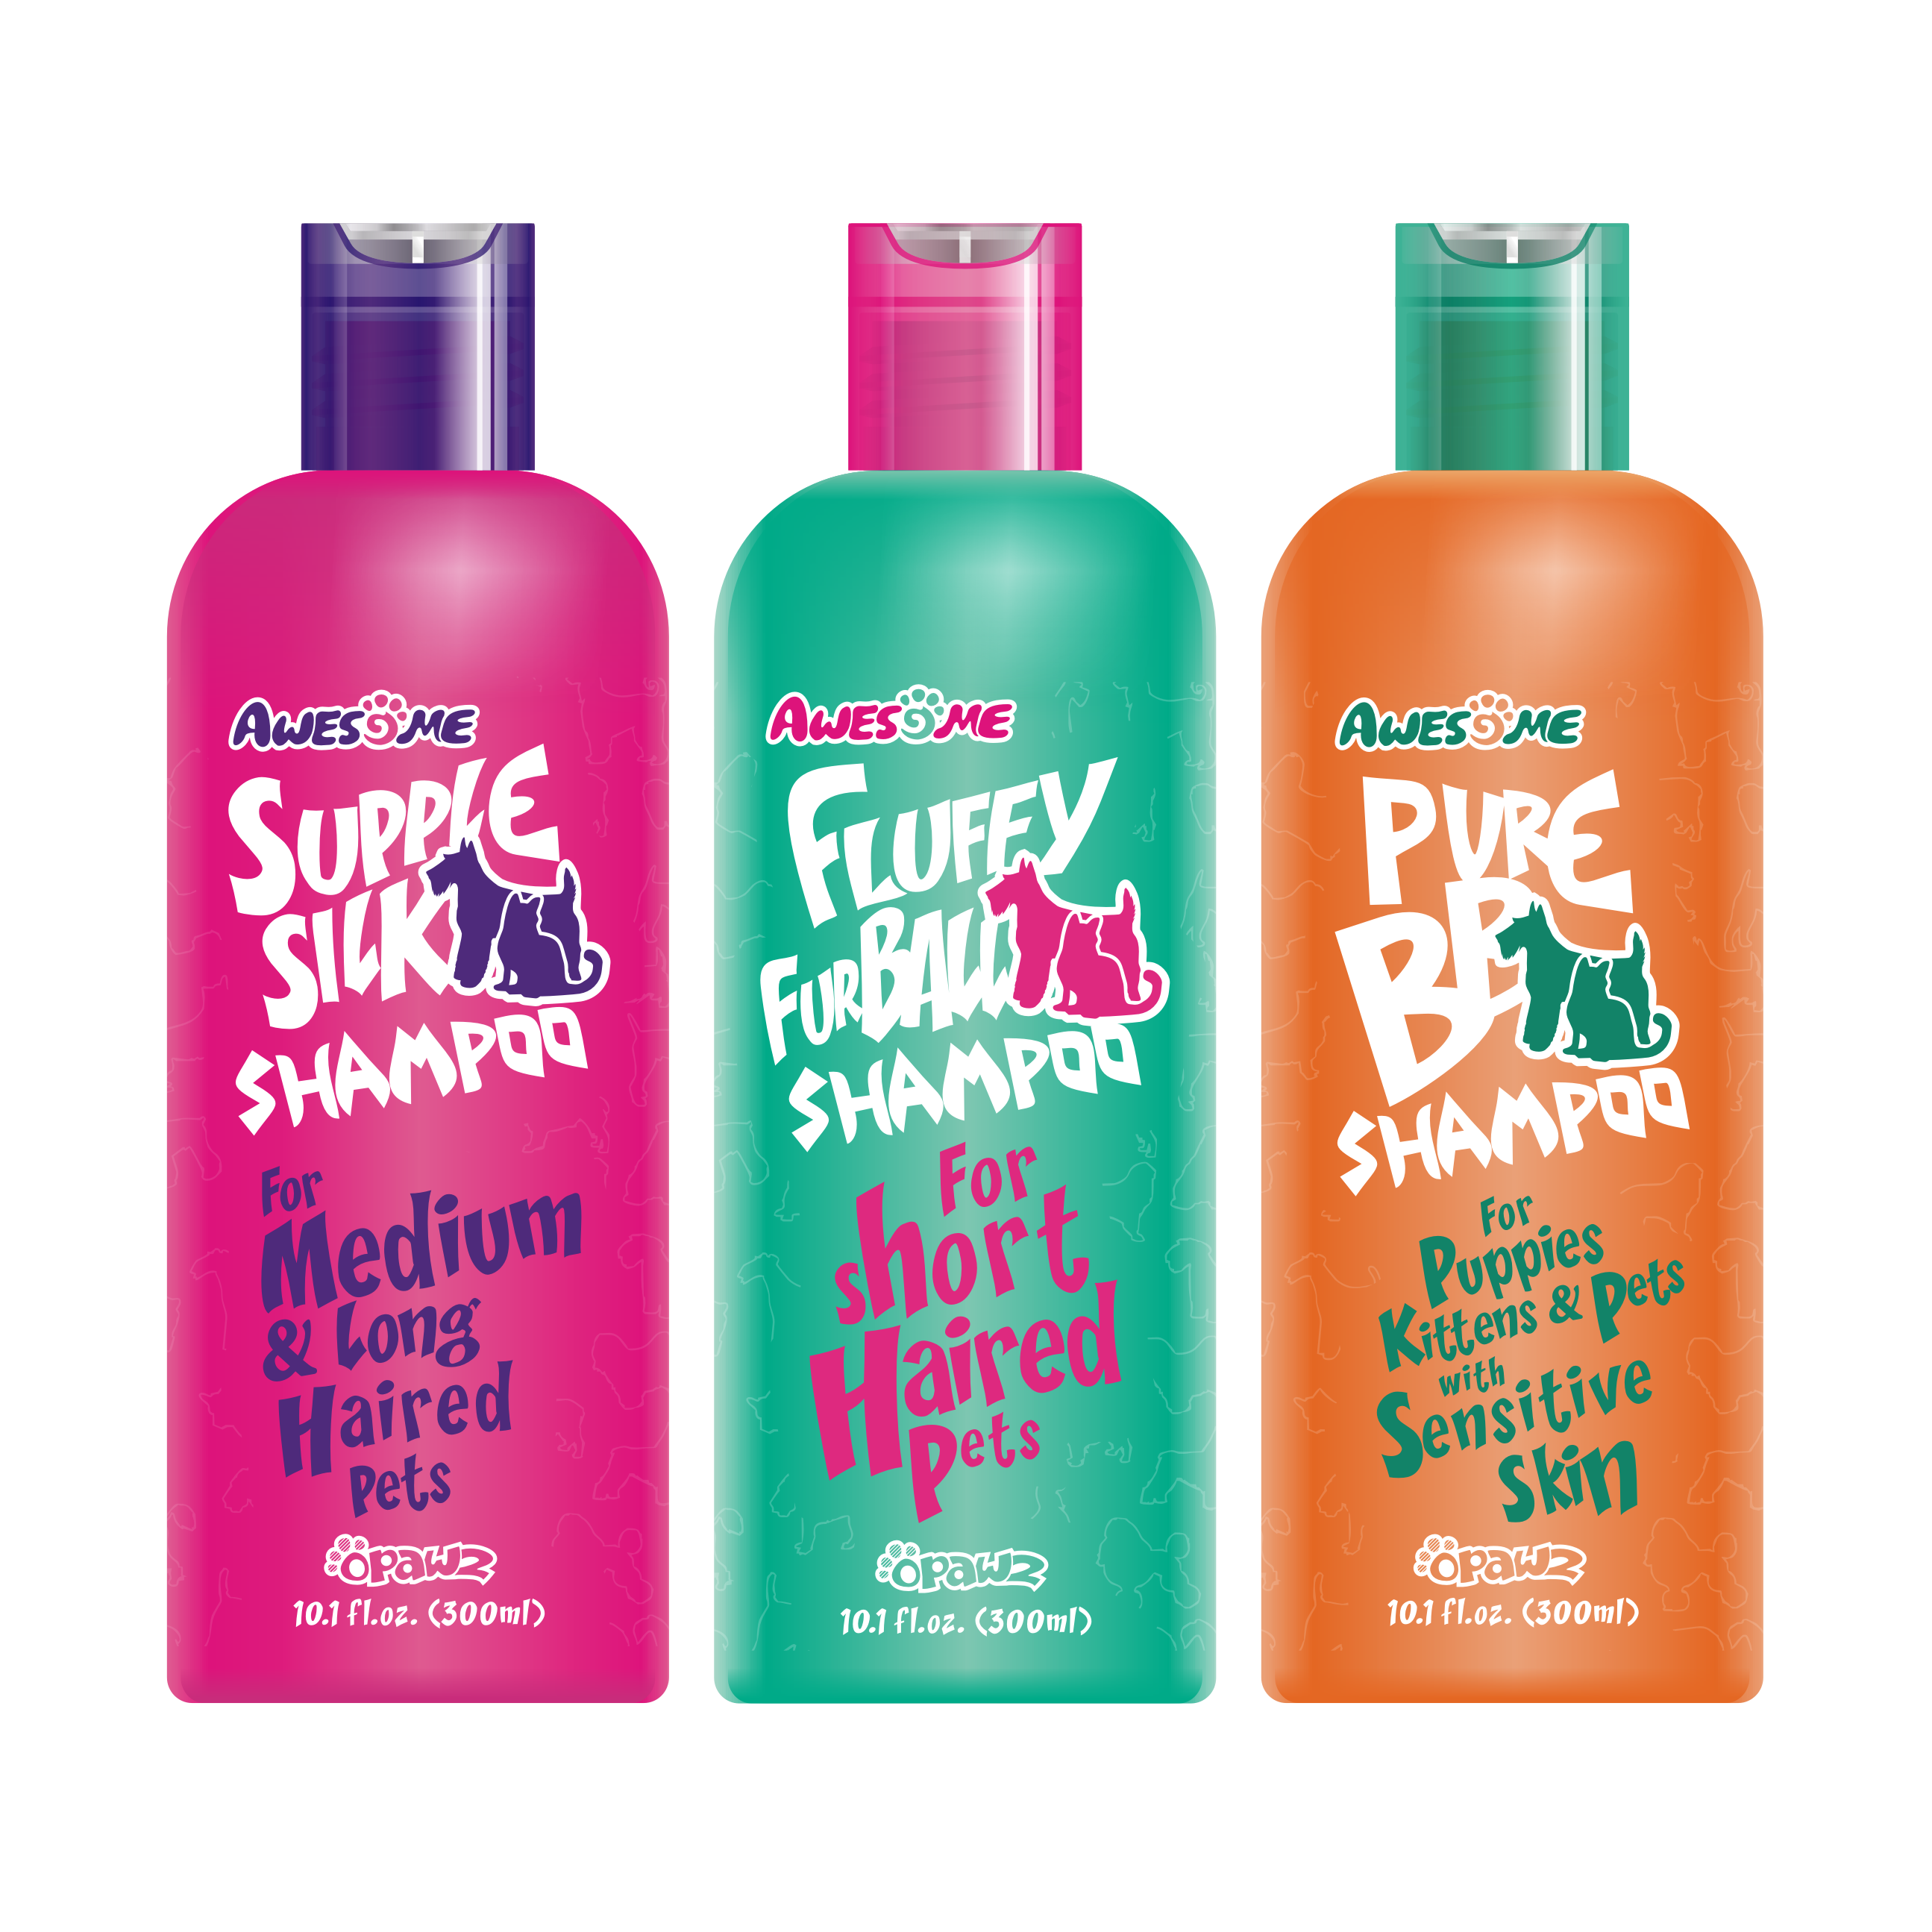  english words which. Shampoo clipart pet shampoo